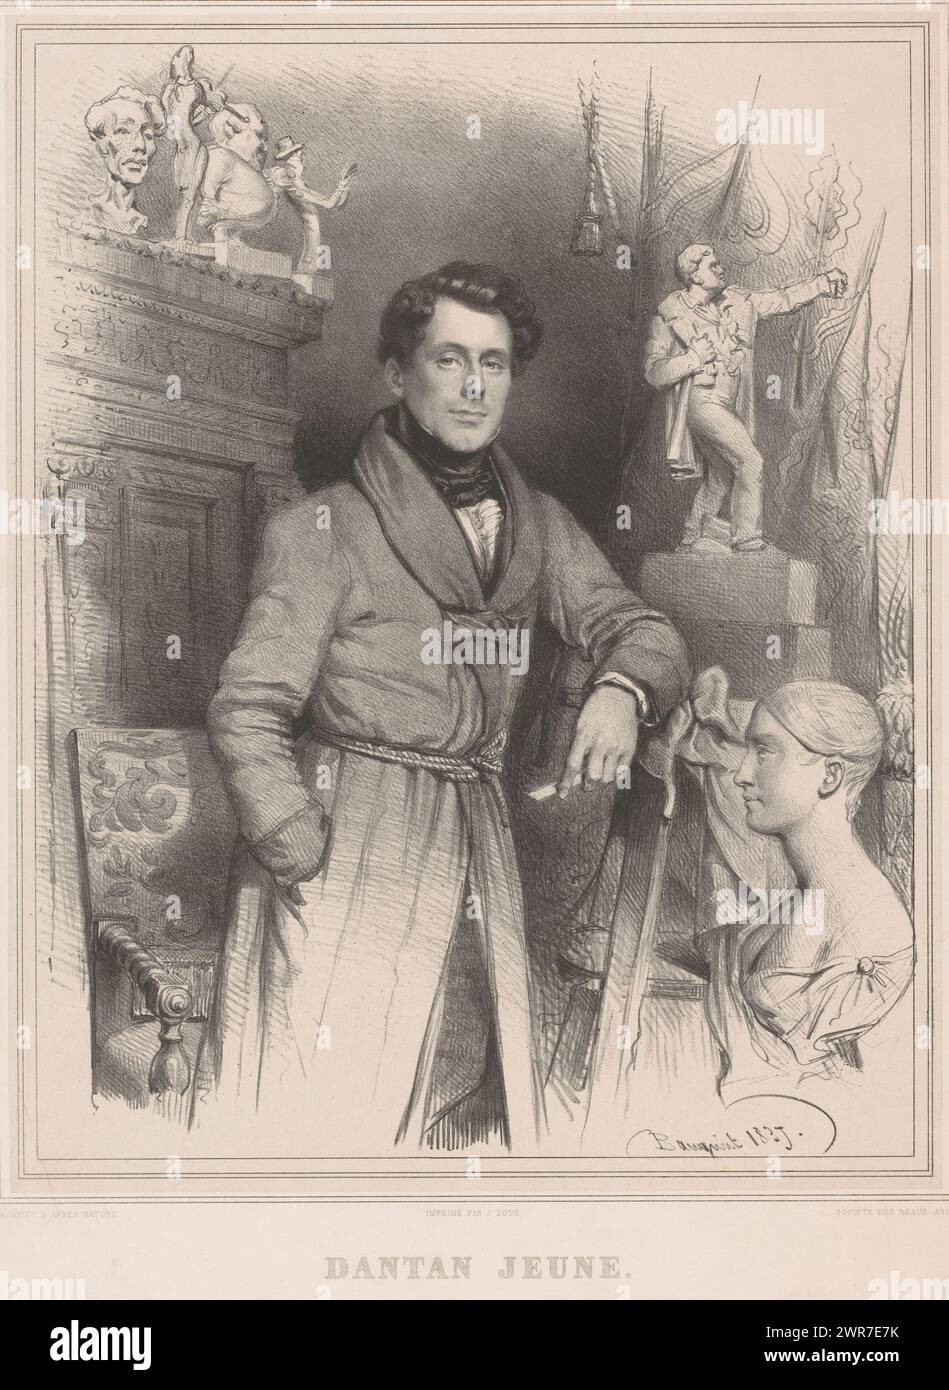 Portrait of Jean-Pierre Dantan, Dantan jeune (title on object), print maker: Charles Baugniet, after own design by: Charles Baugniet, printer: J. Lots, Brussels, 1837, paper, height 552 mm × width 410 mm, print Stock Photo